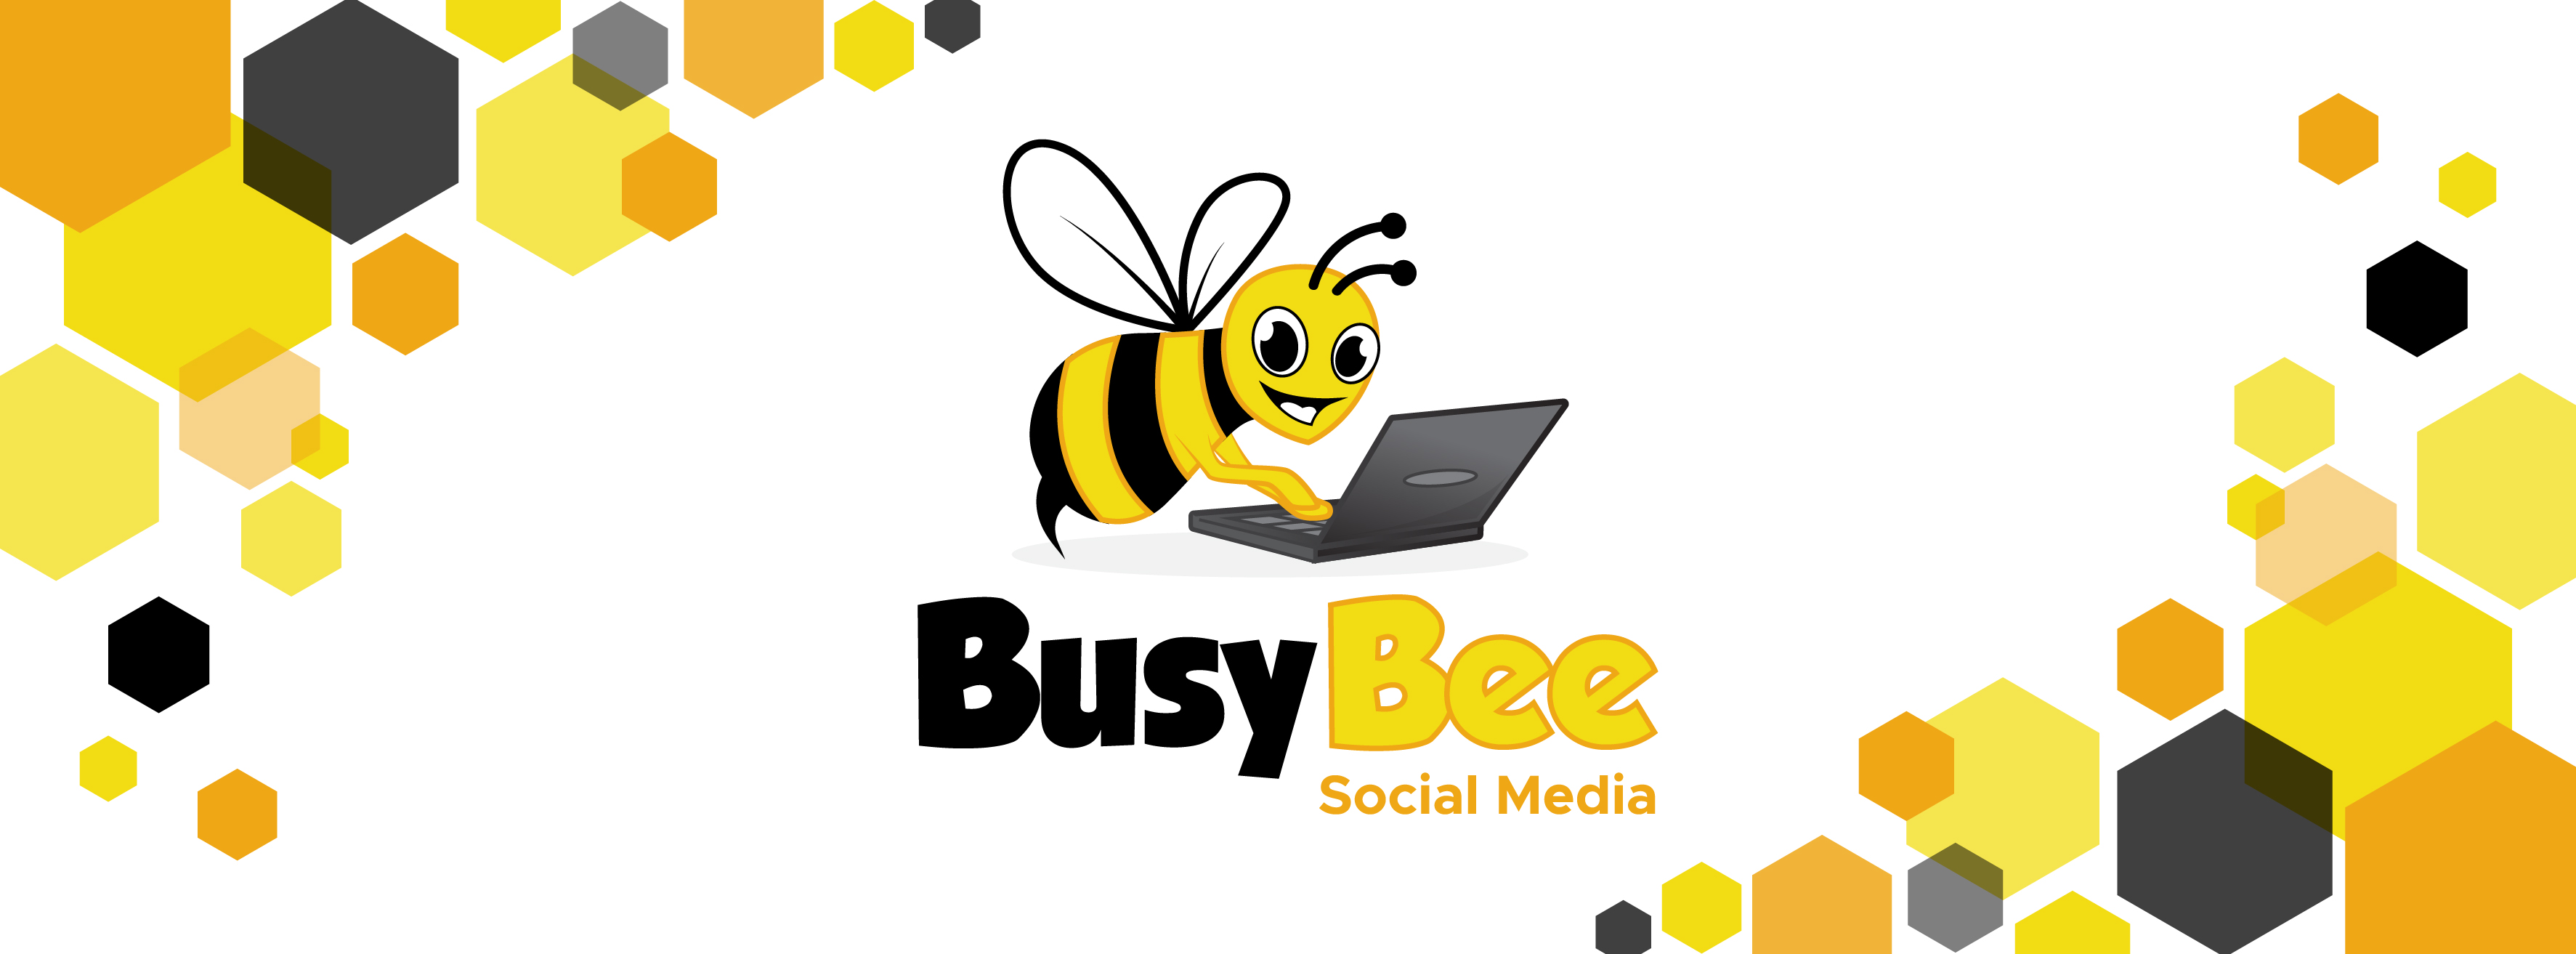 busybee-math-concept-ukg-youtube